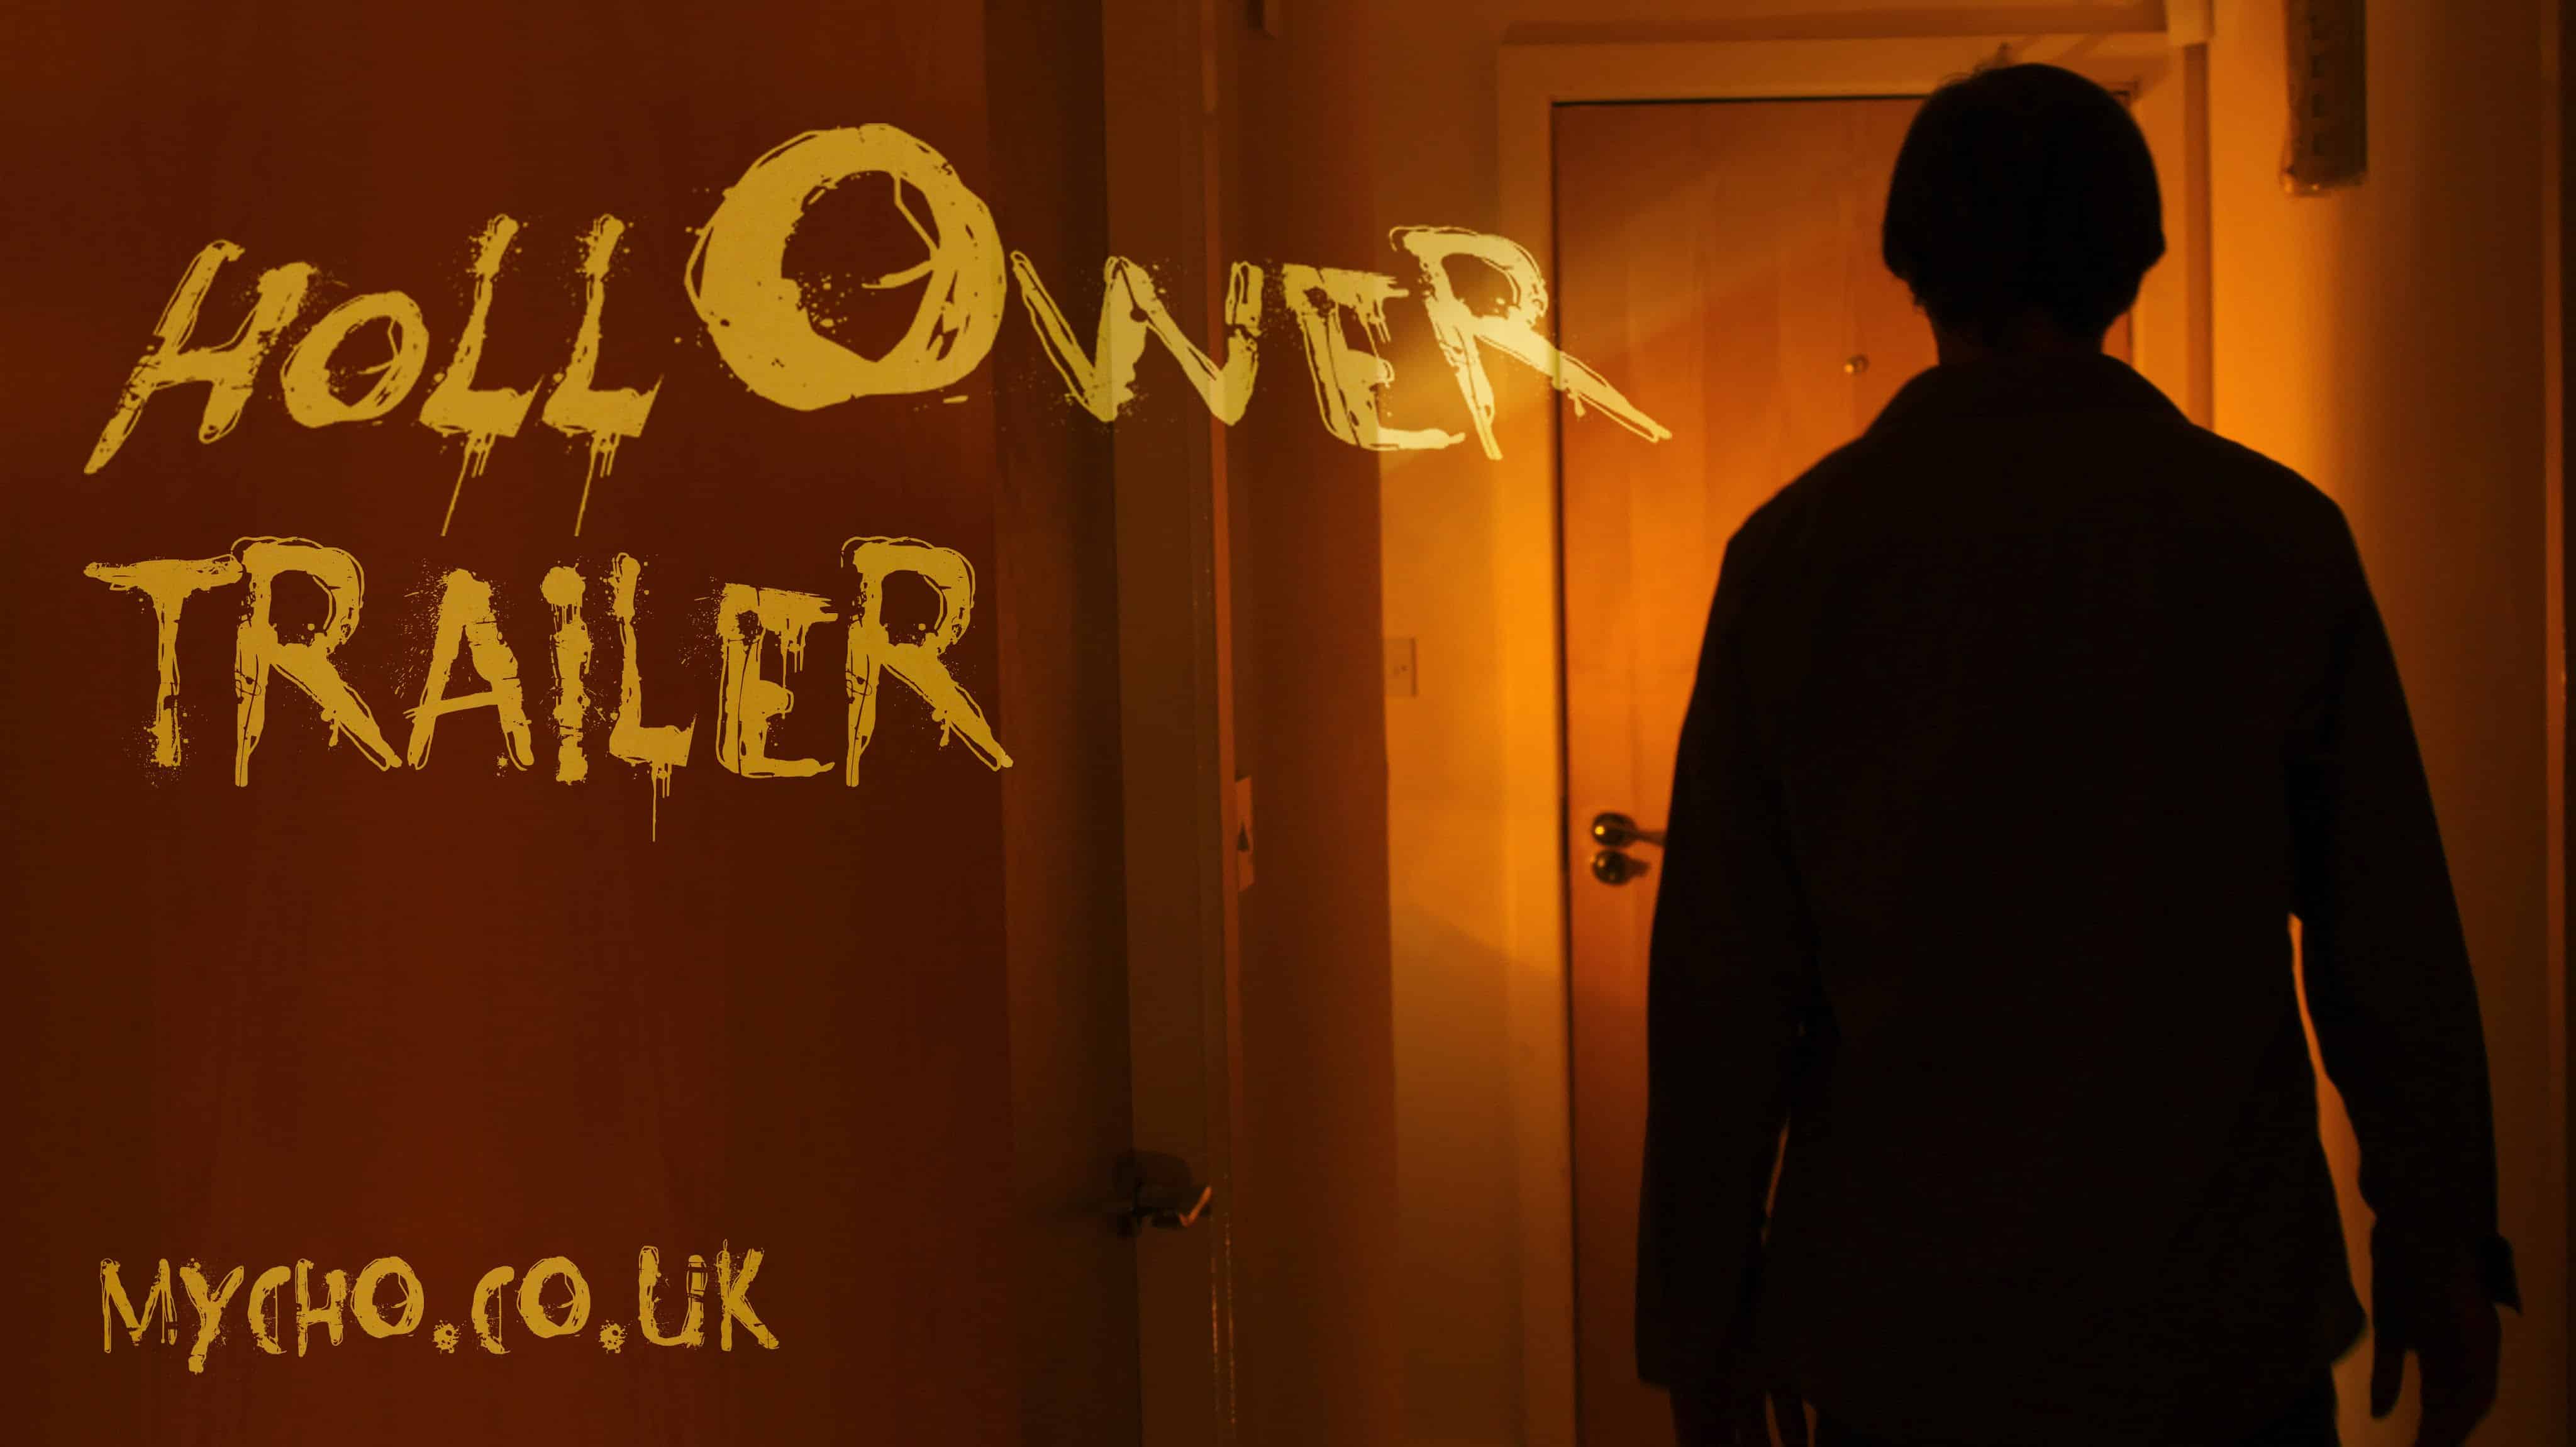 Hollower - Trailer